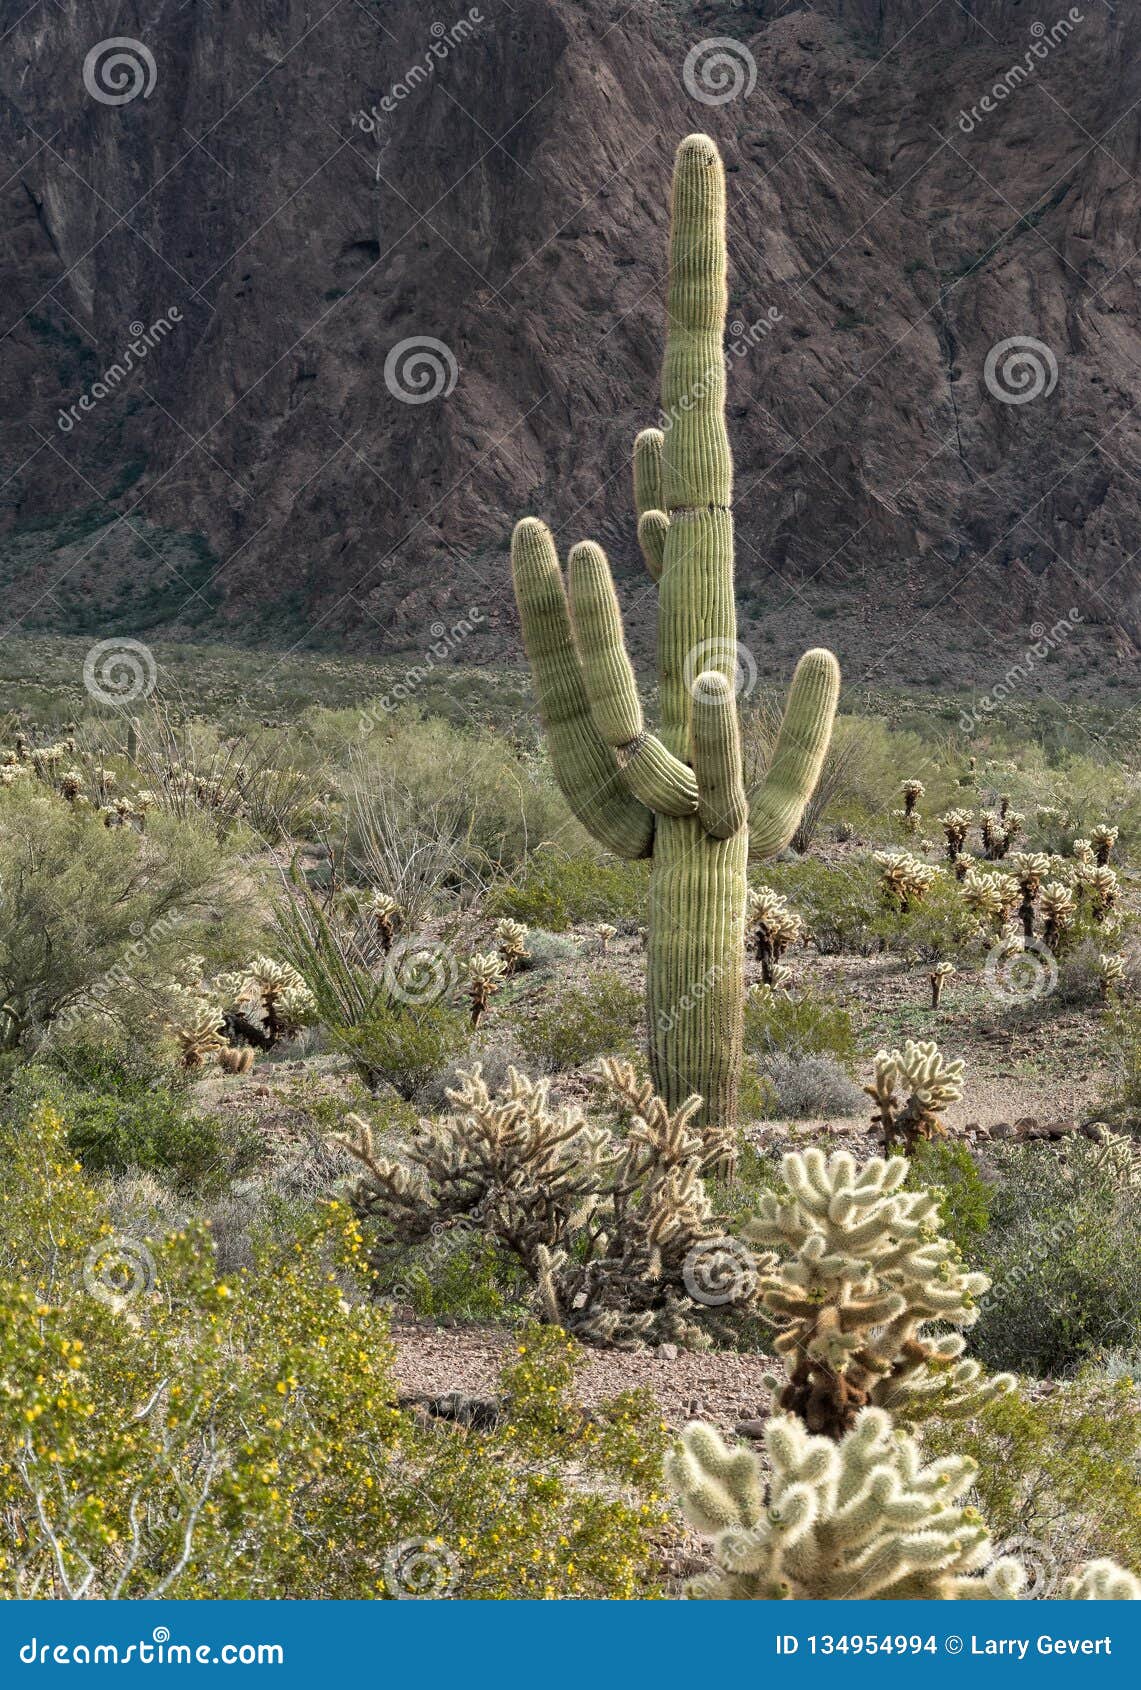 saguaro cactus, kofa national wildlife refuge